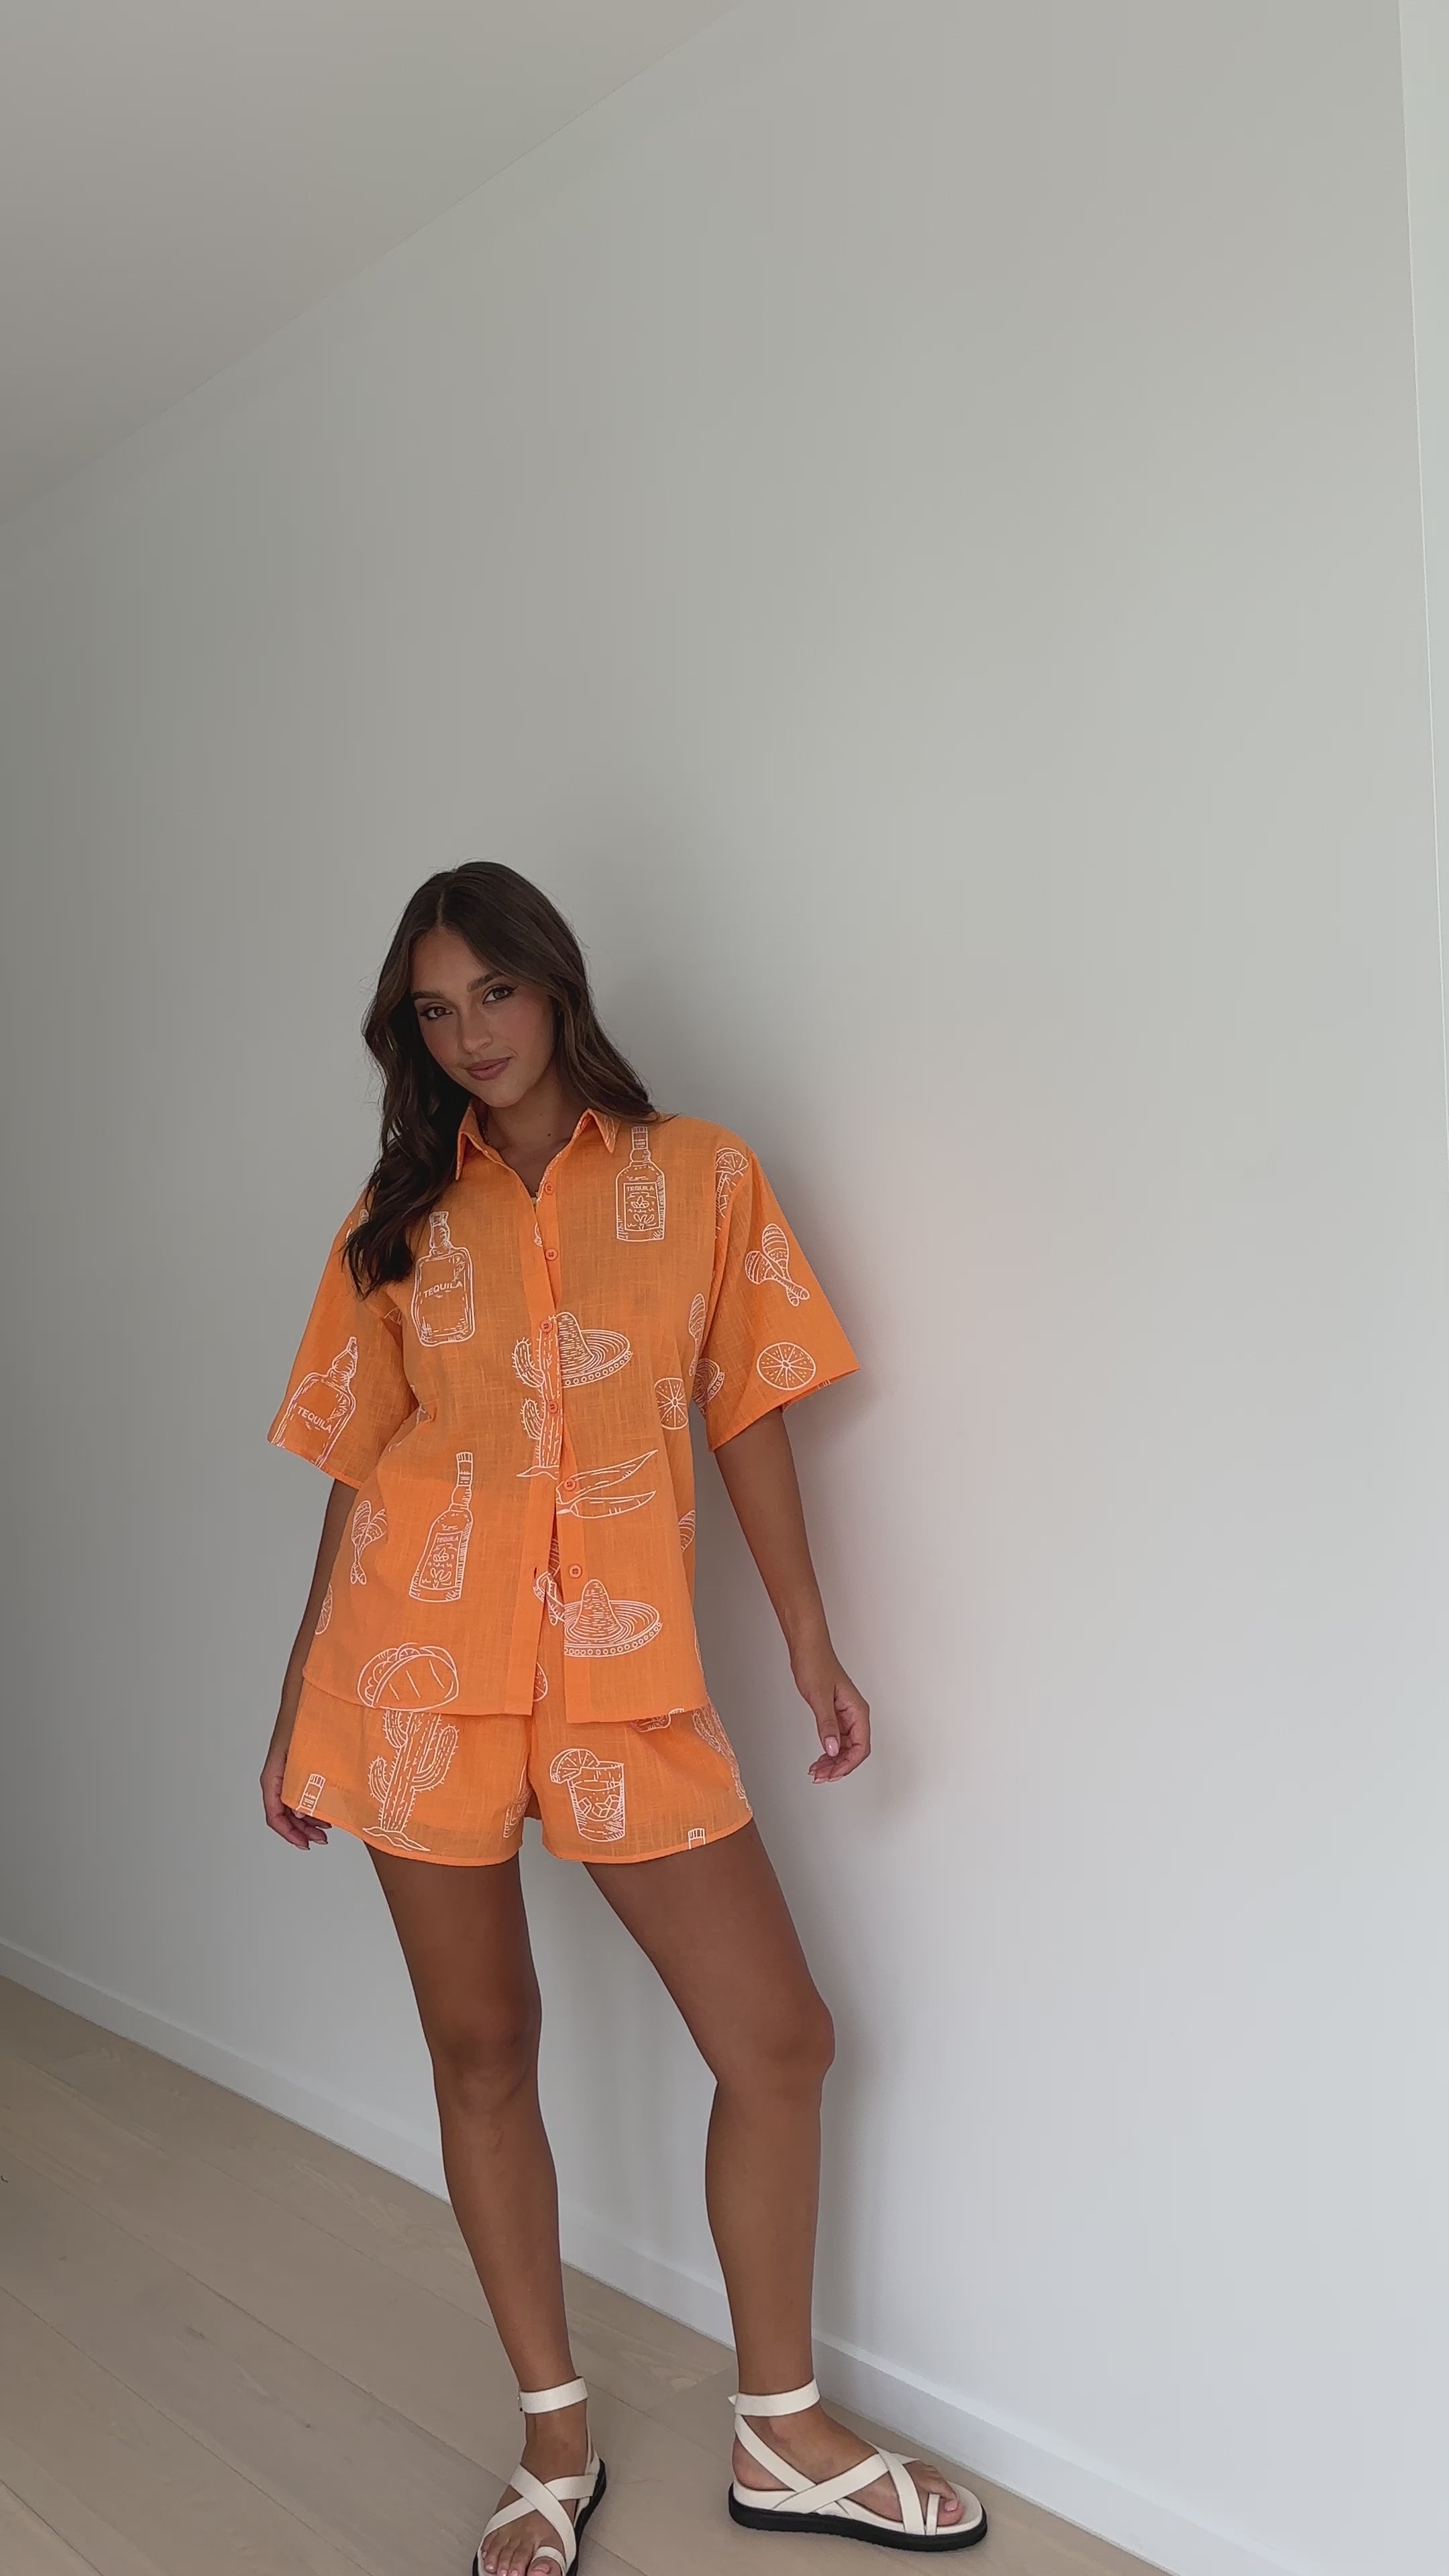 Bobbi Button Up Shirt and Shorts - Orange/White Tequila & Tacos Print